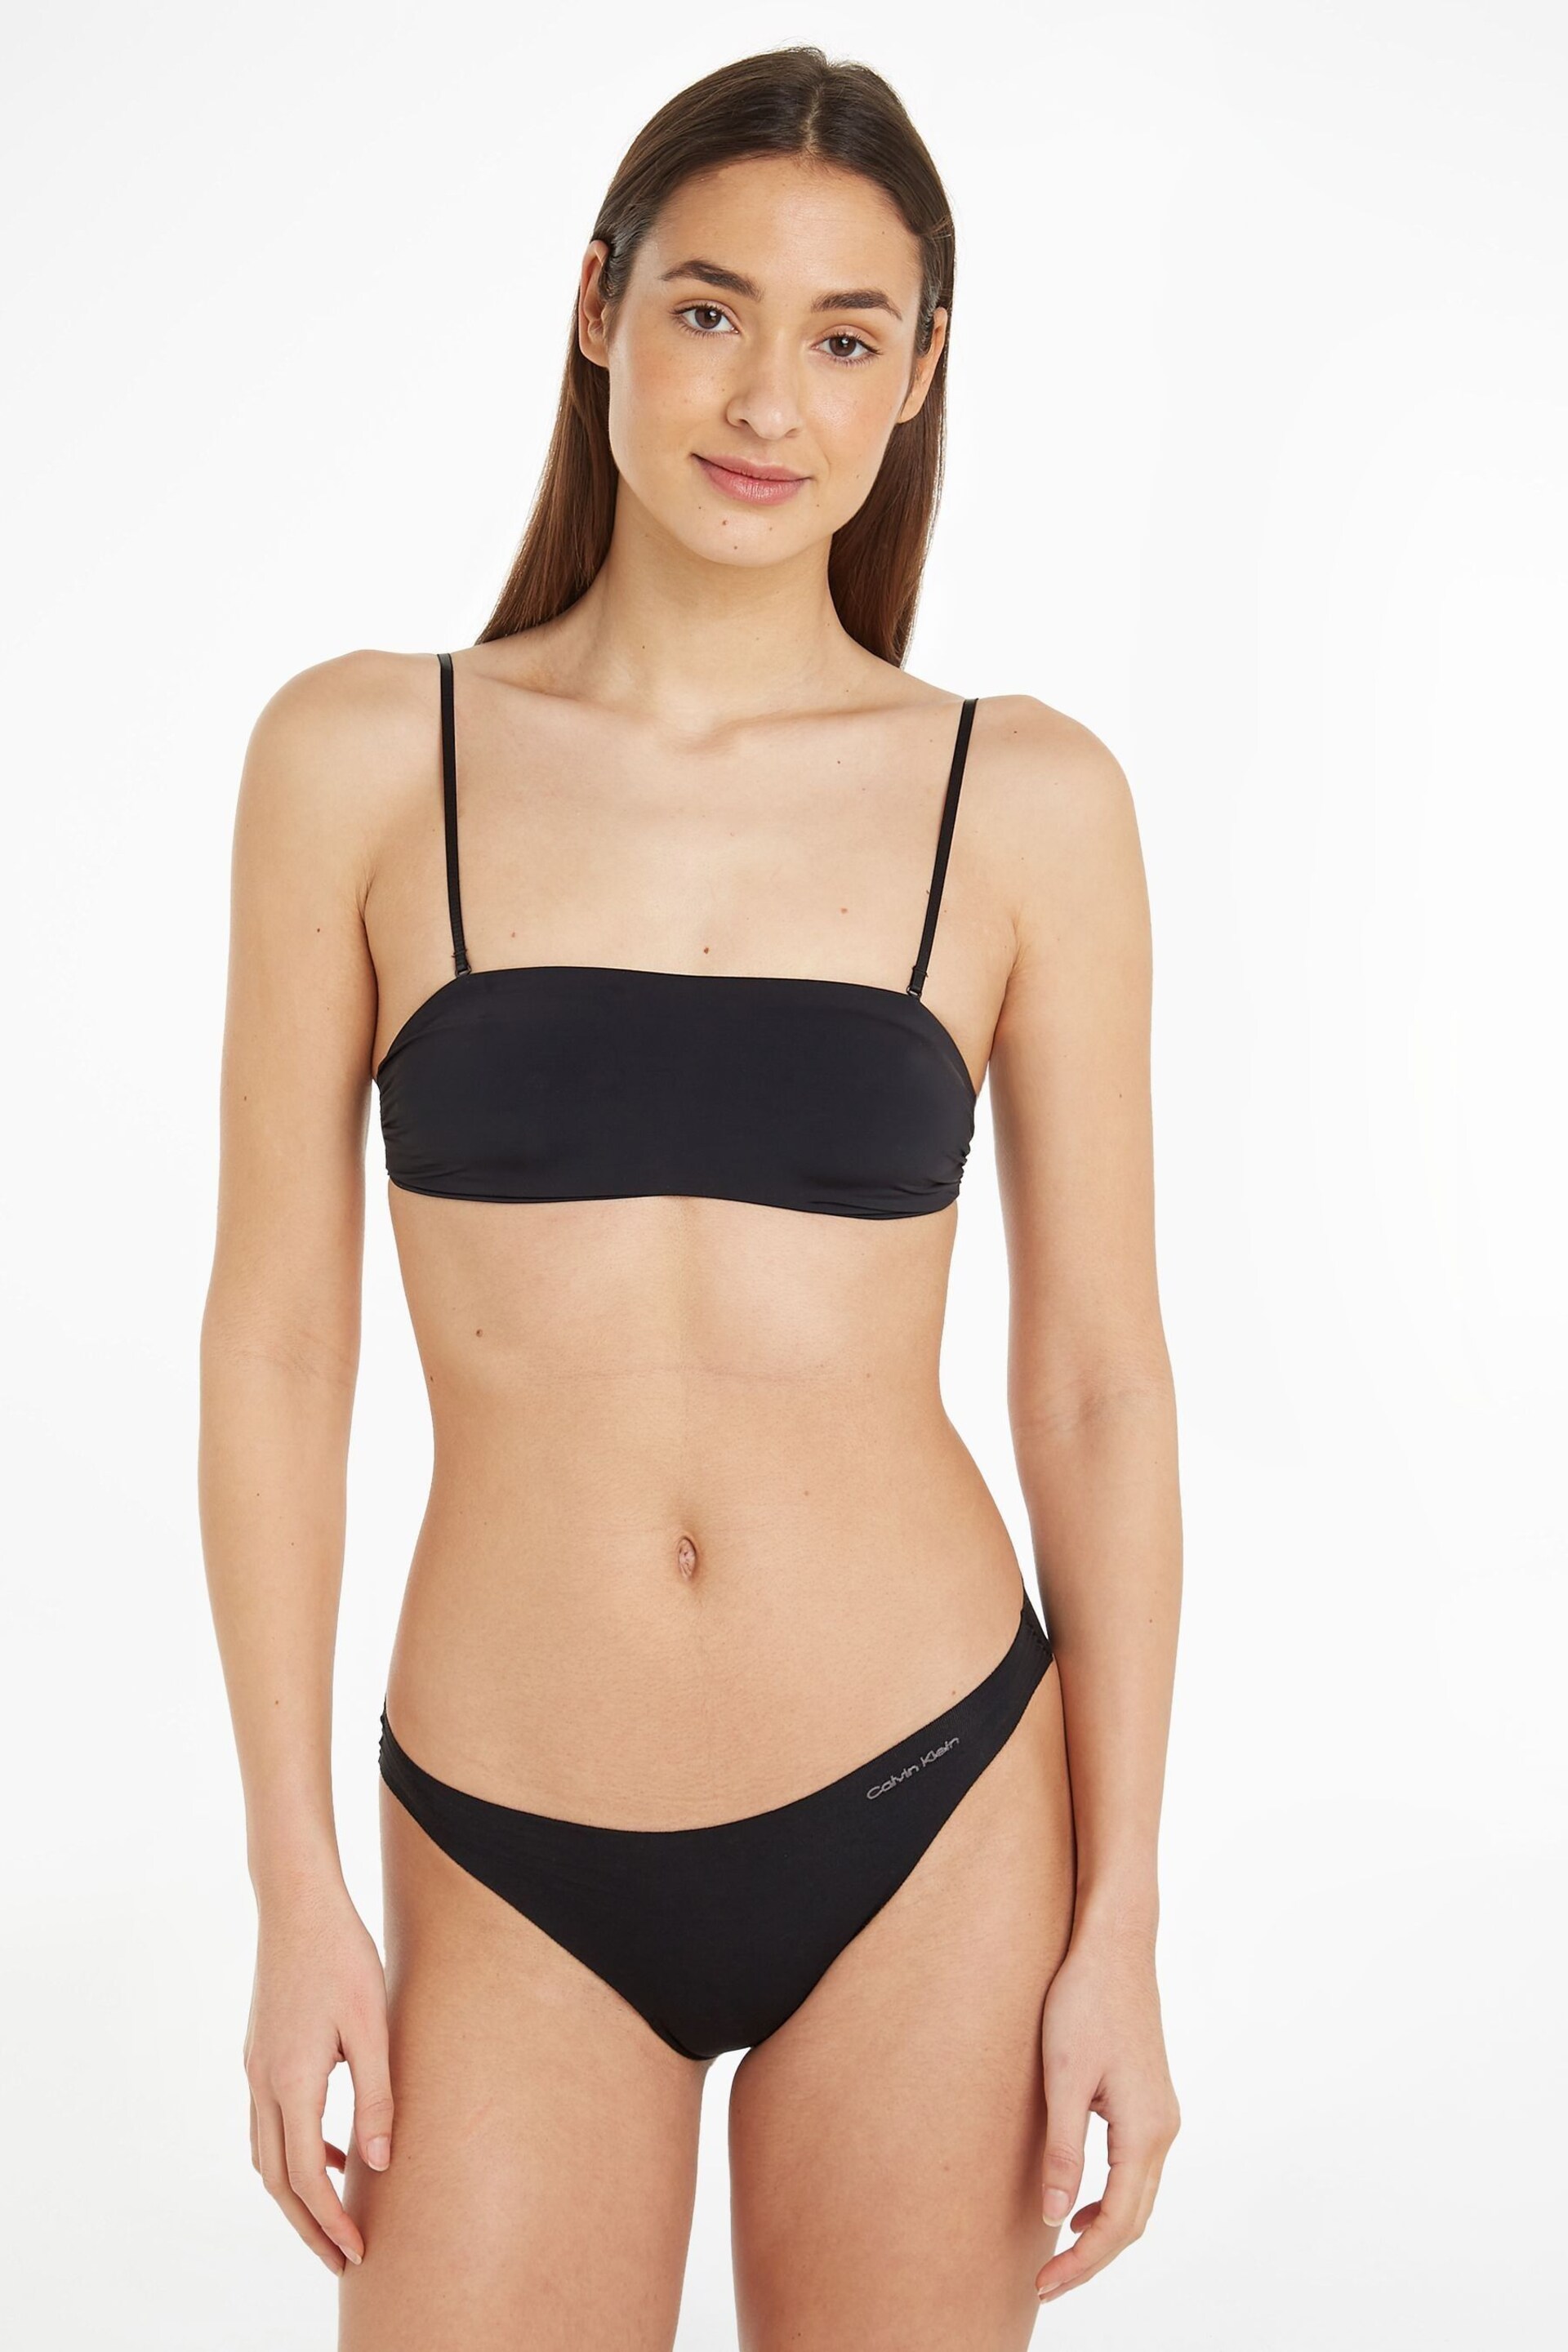 Calvin Klein Black Bandeau Bikini Top - Image 1 of 6